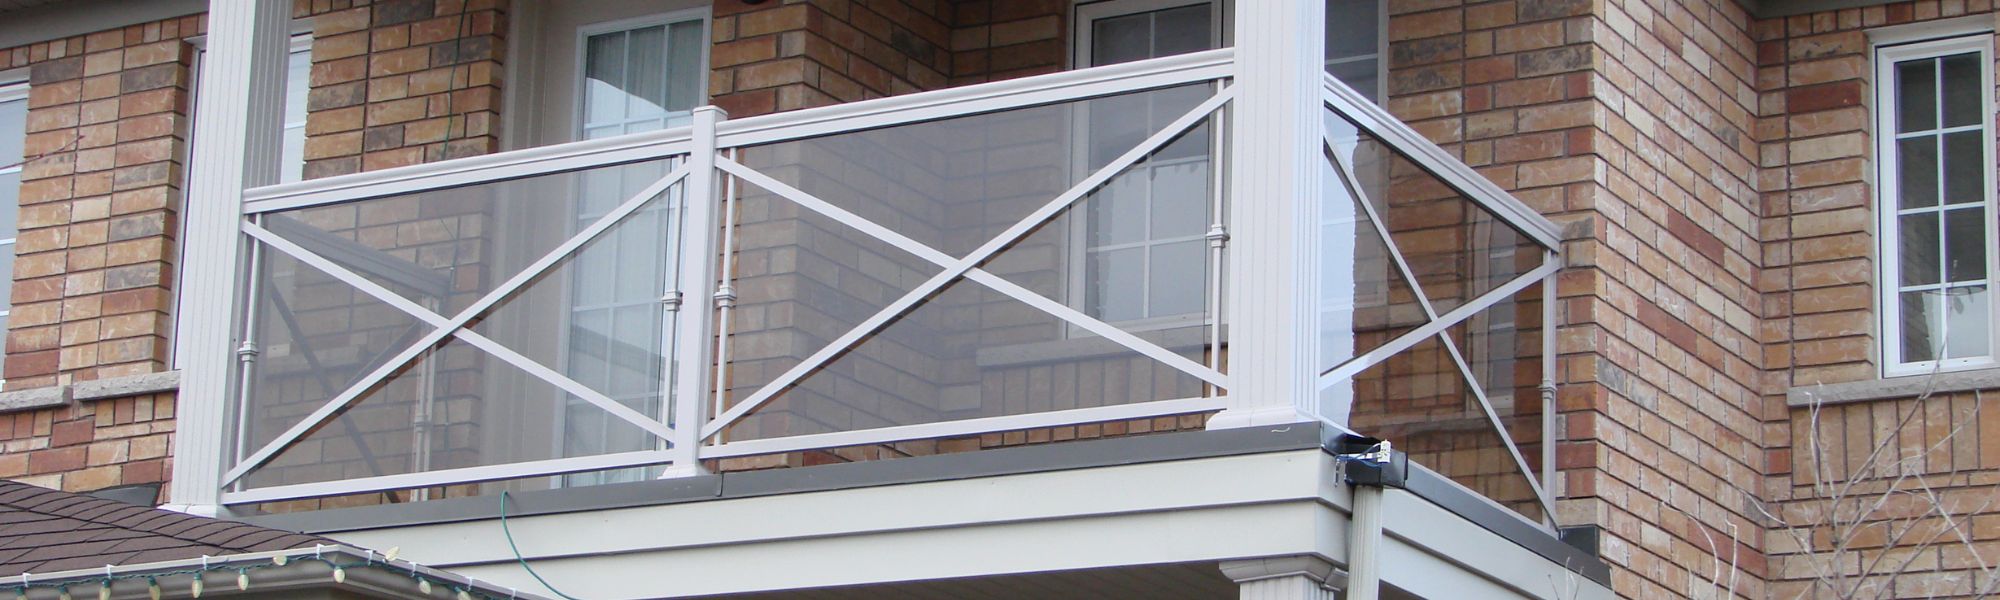 tempered glass balcony railing